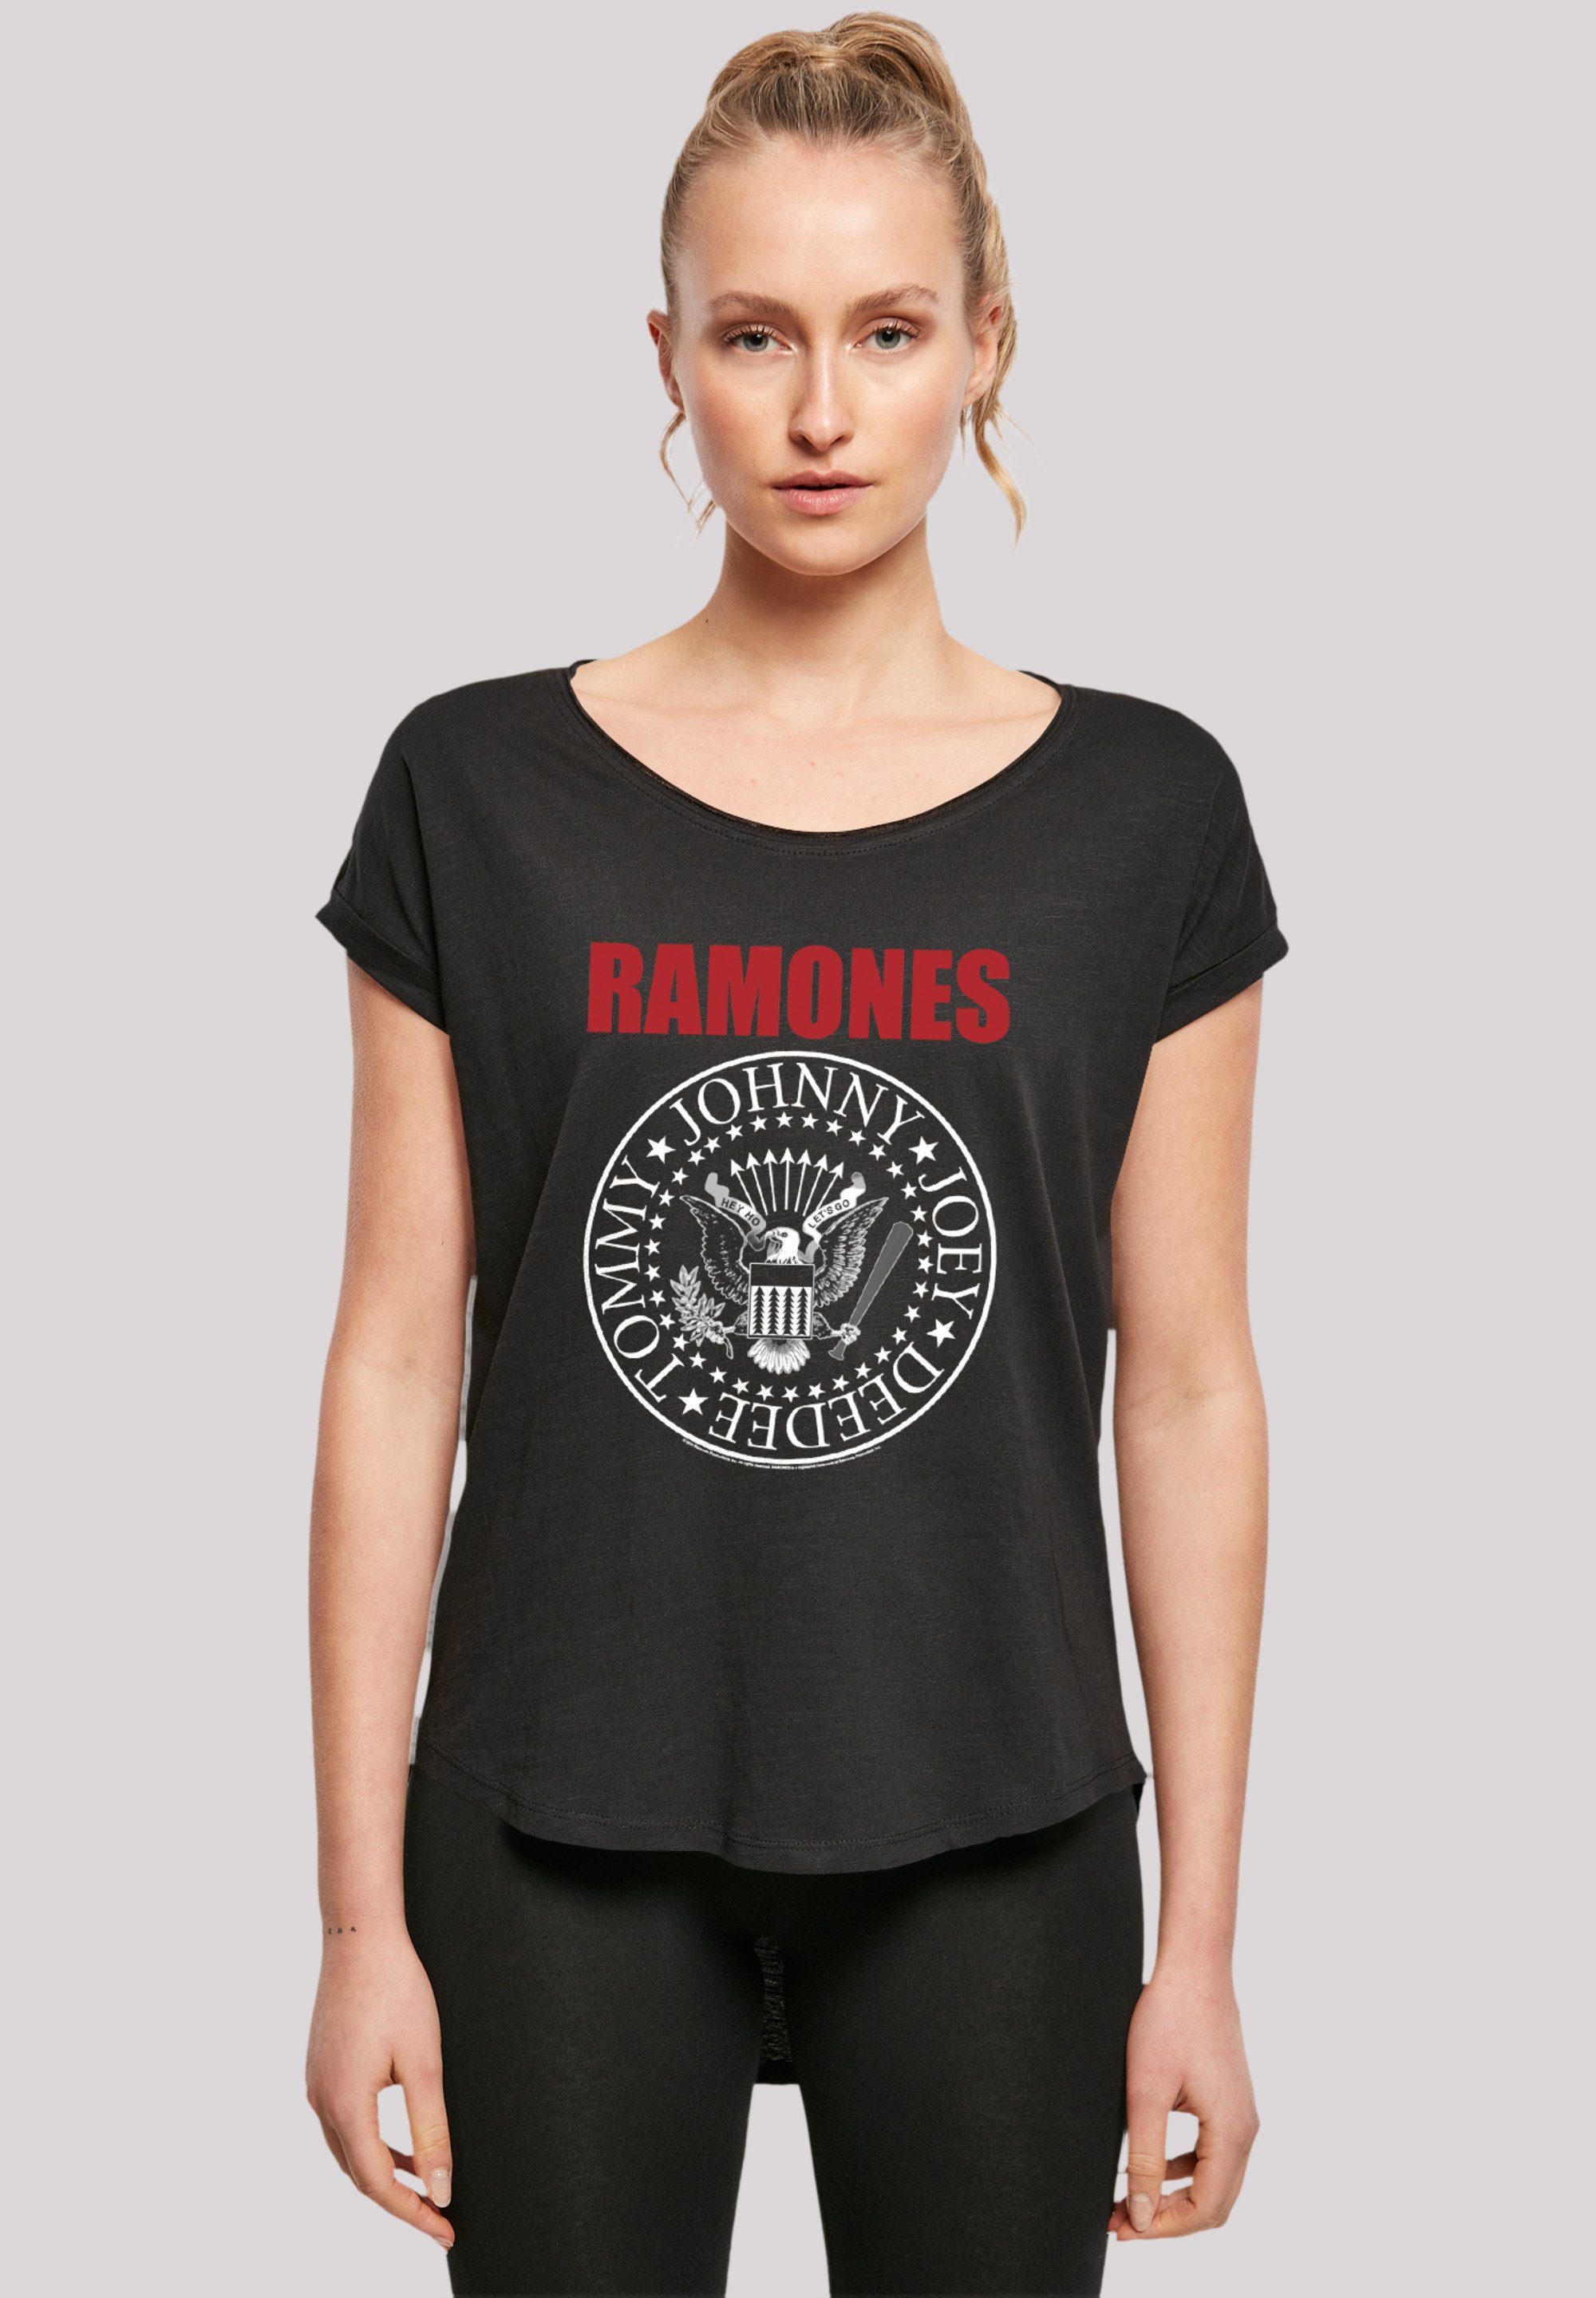 Band Seal Rock-Musik Rock Red Musik T-Shirt Premium Text Qualität, F4NT4STIC Ramones Band,